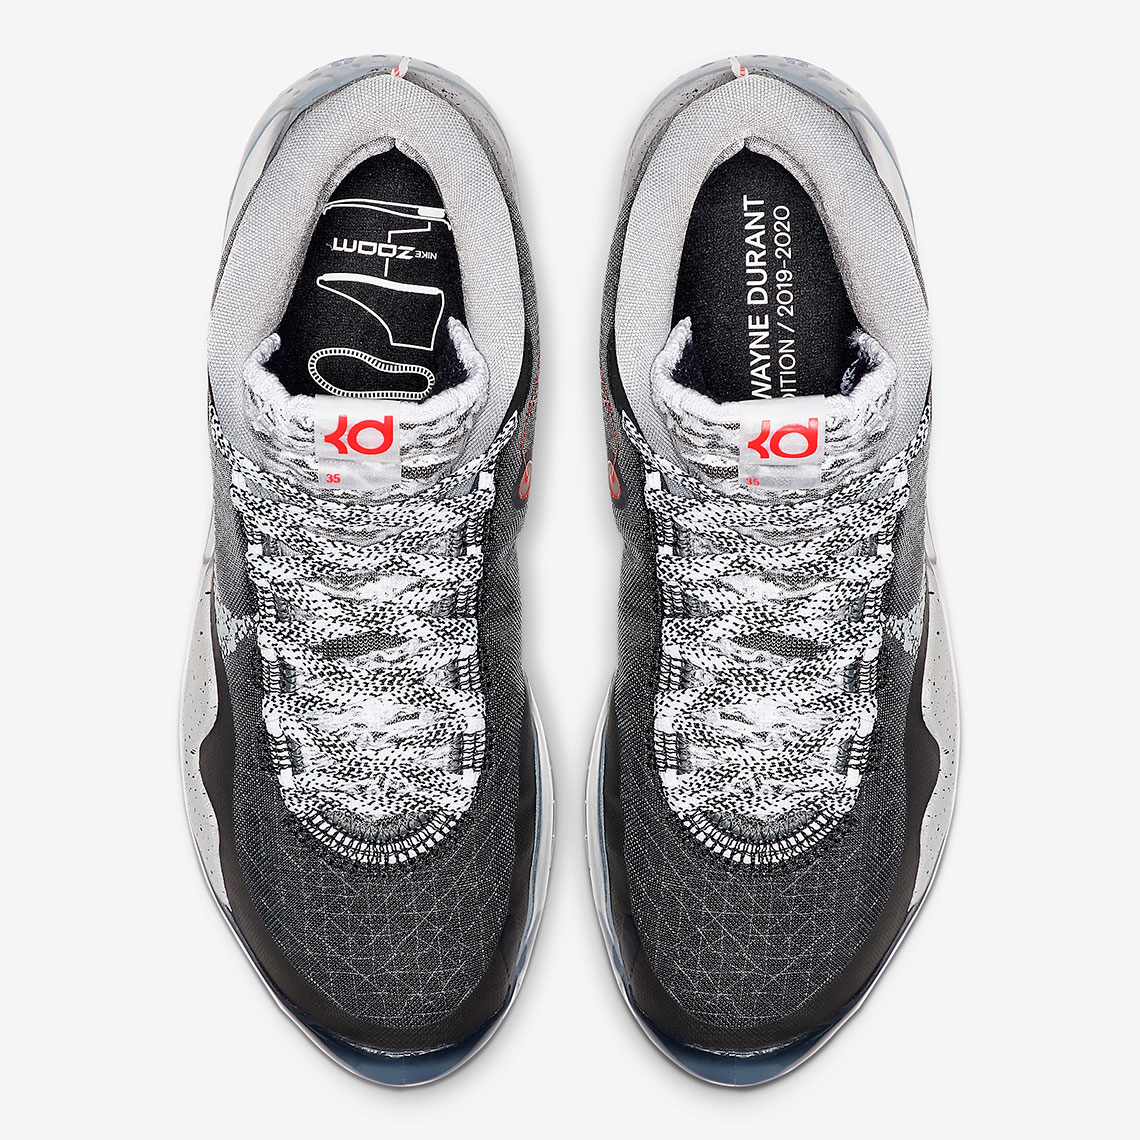 Nike Kd 12 Black Cement Grey Red Ar4230 002 1